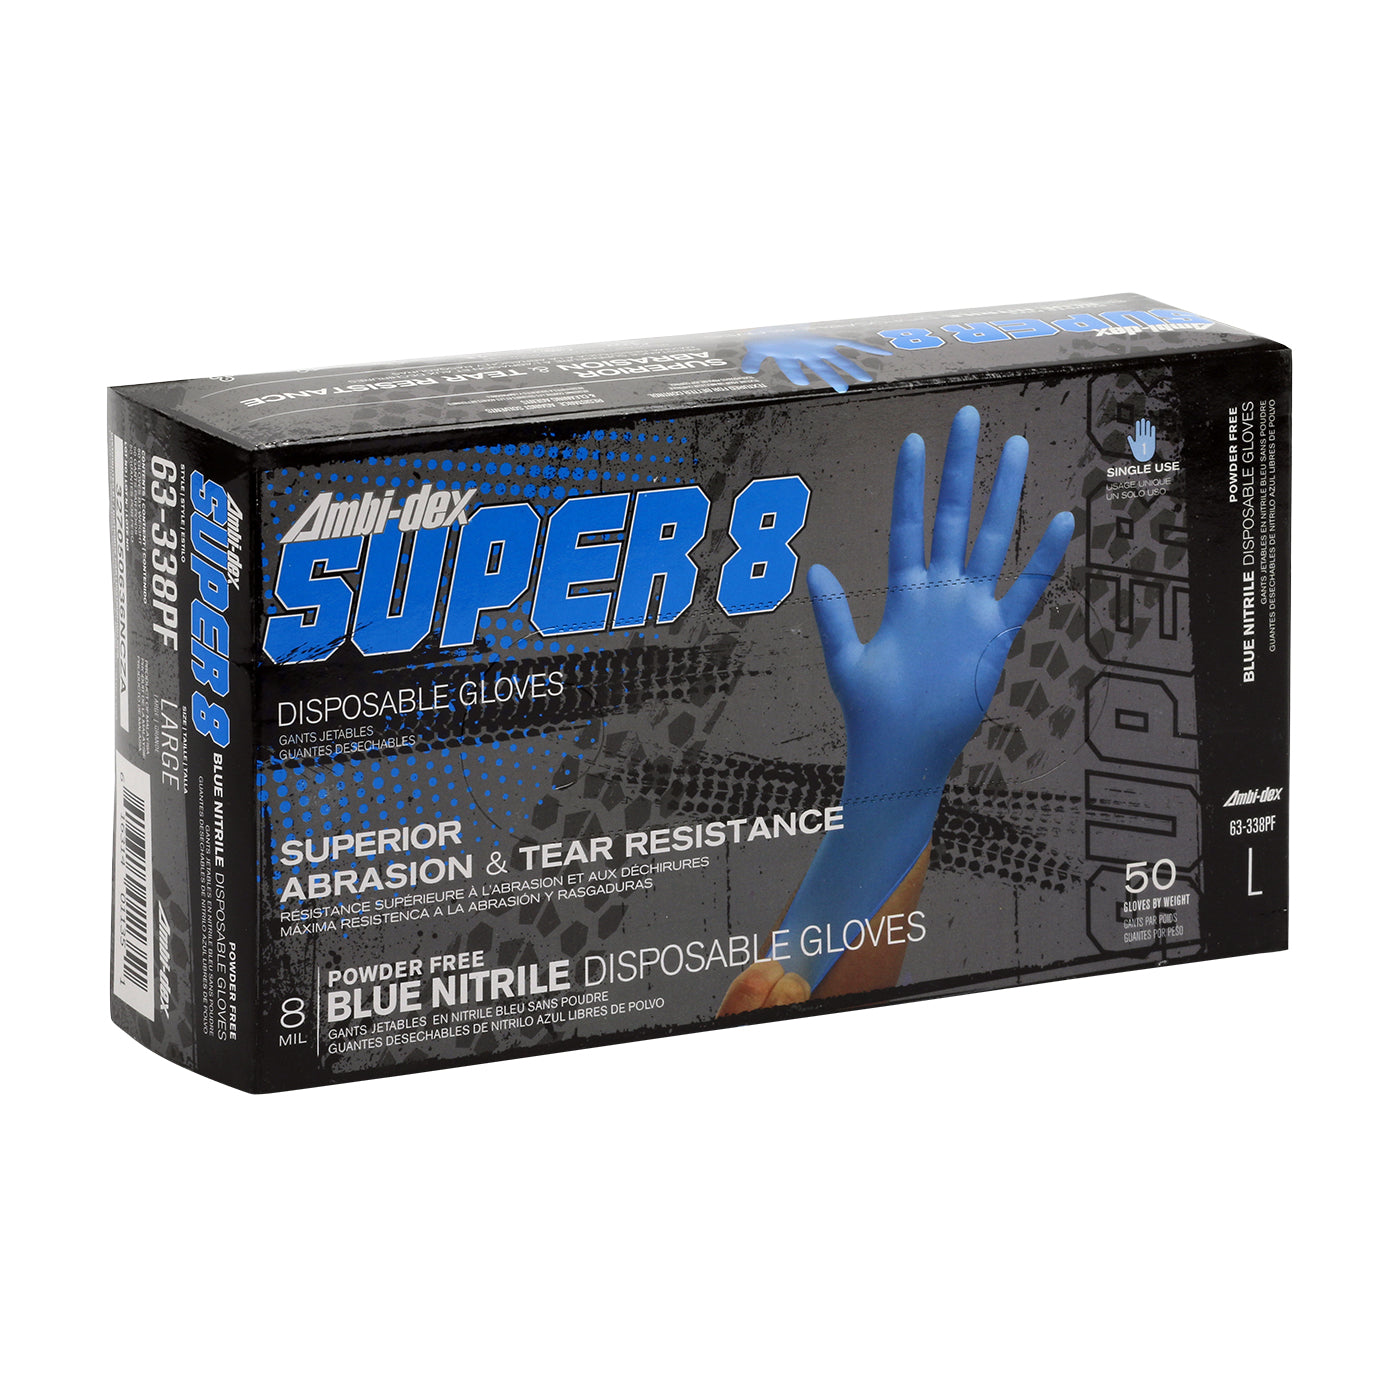 Ambi-dex 63-338PF/L Disposable Nitrile Glove, Powder Free with Textured Grip - 8 mil